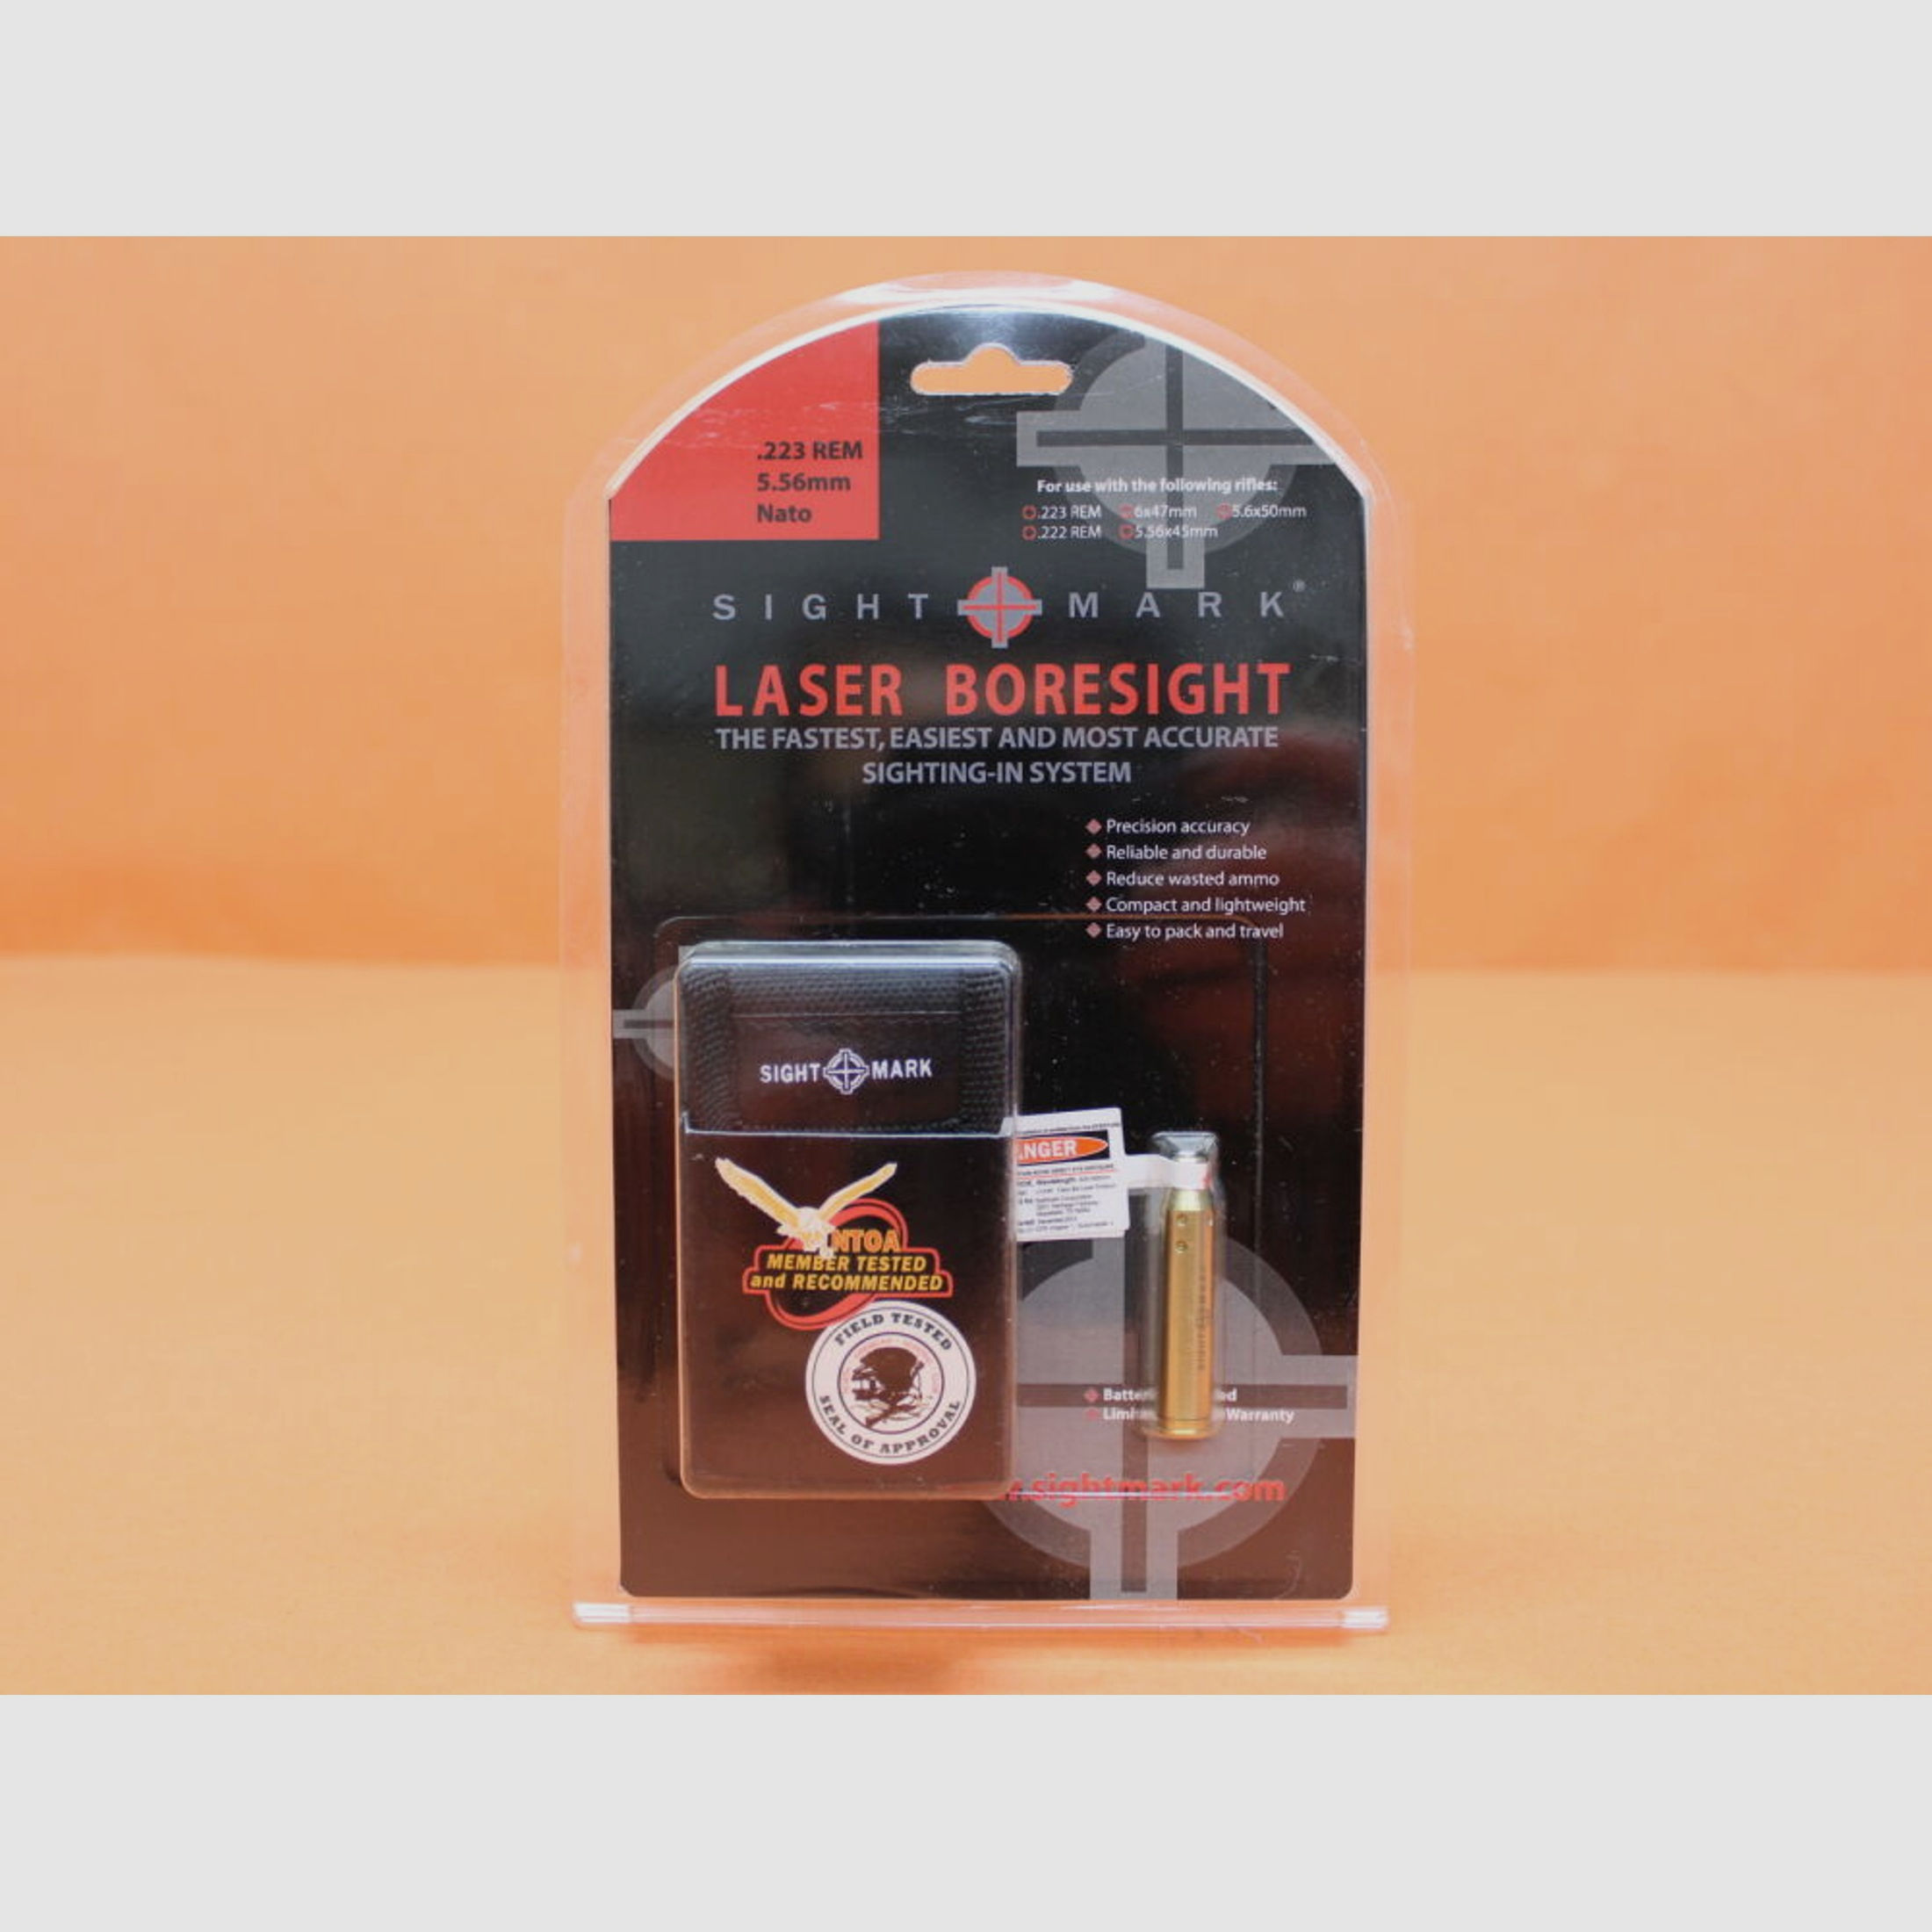 Sightmark	 Sightmark Laser Boresight .223Rem (SM39001)/ Laser-Zielpatrone